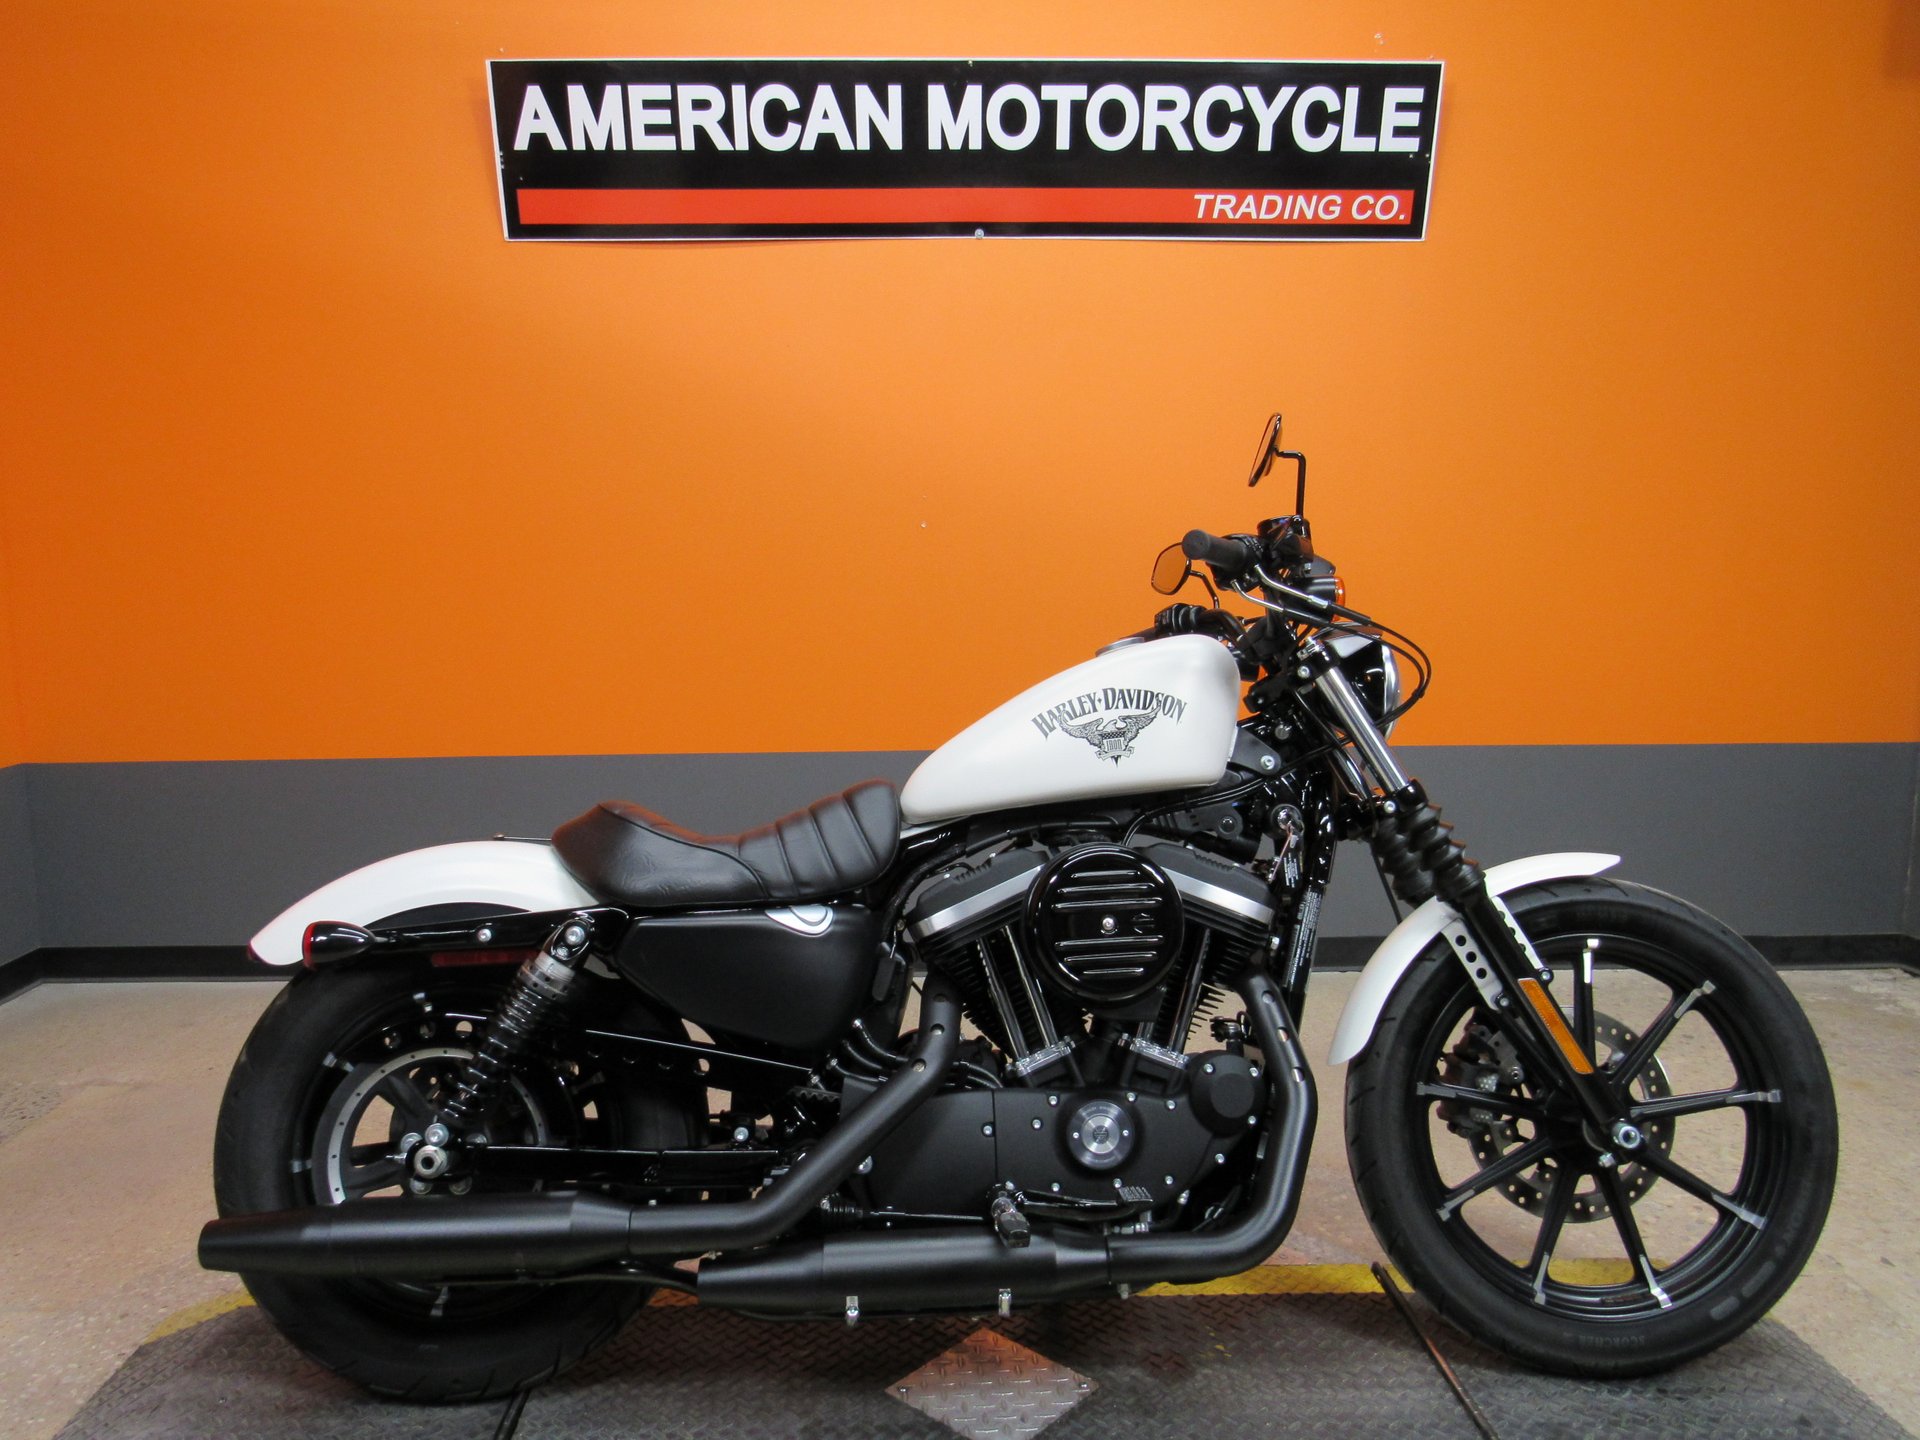 2018 Harley Davidson Sportster 883 American Motorcycle Trading Company Used Harley Davidson Motorcycles